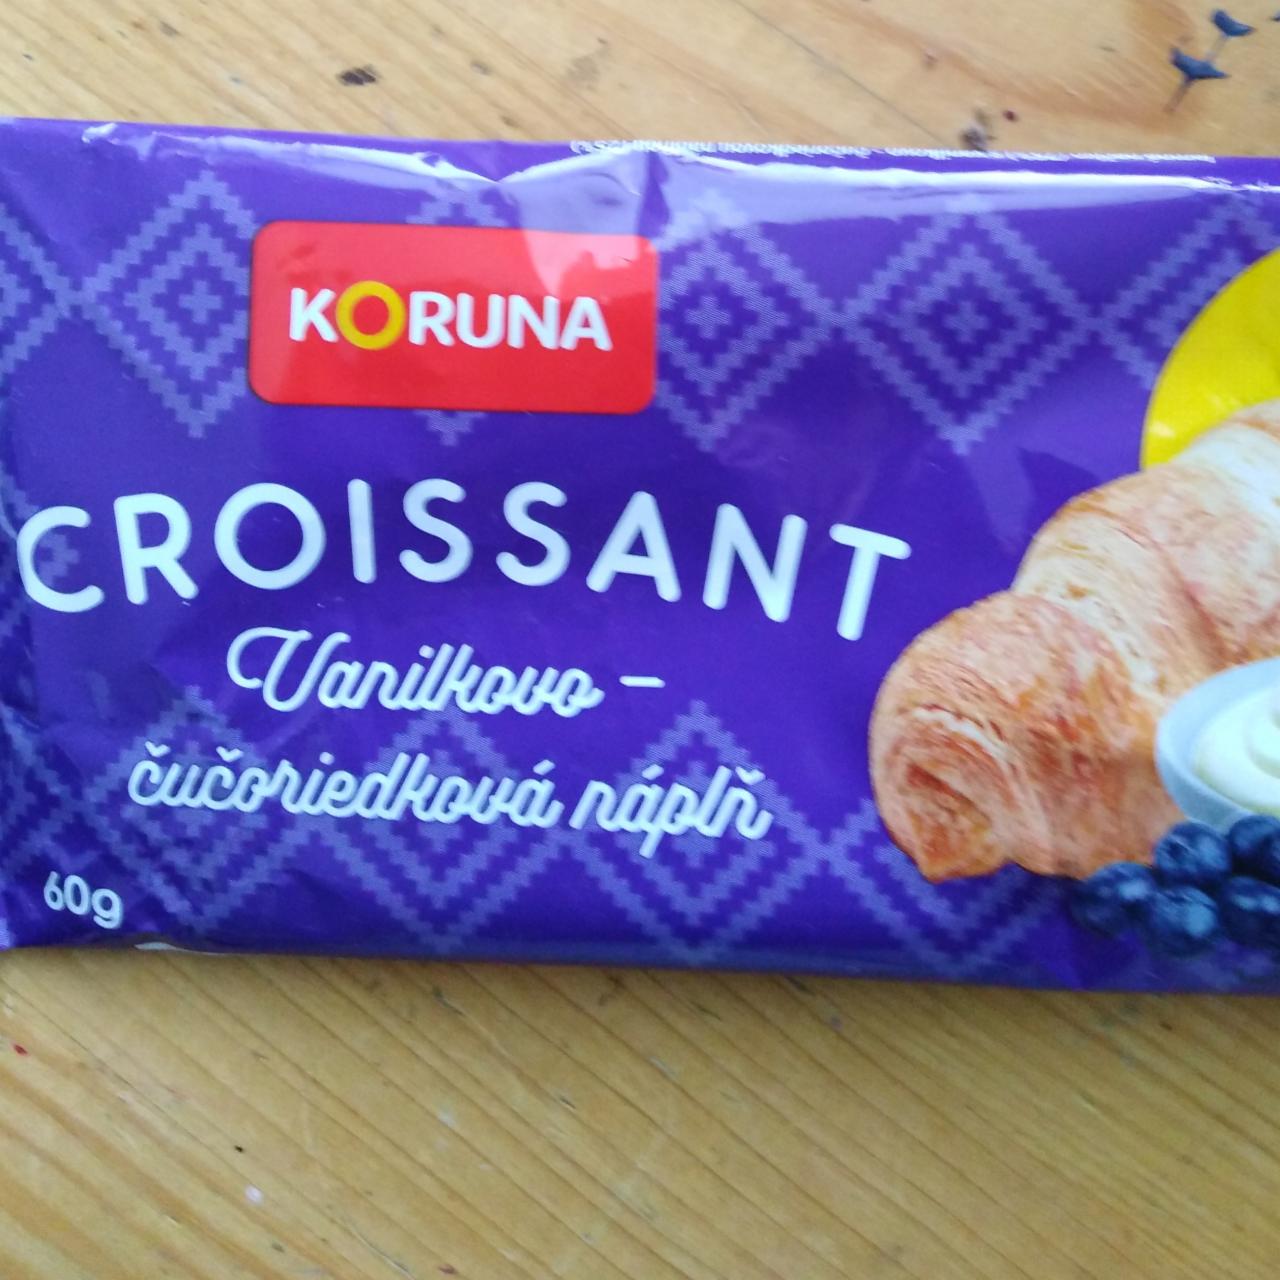 Fotografie - Croissant Vanilkovo - čučoriedková náplň Koruna